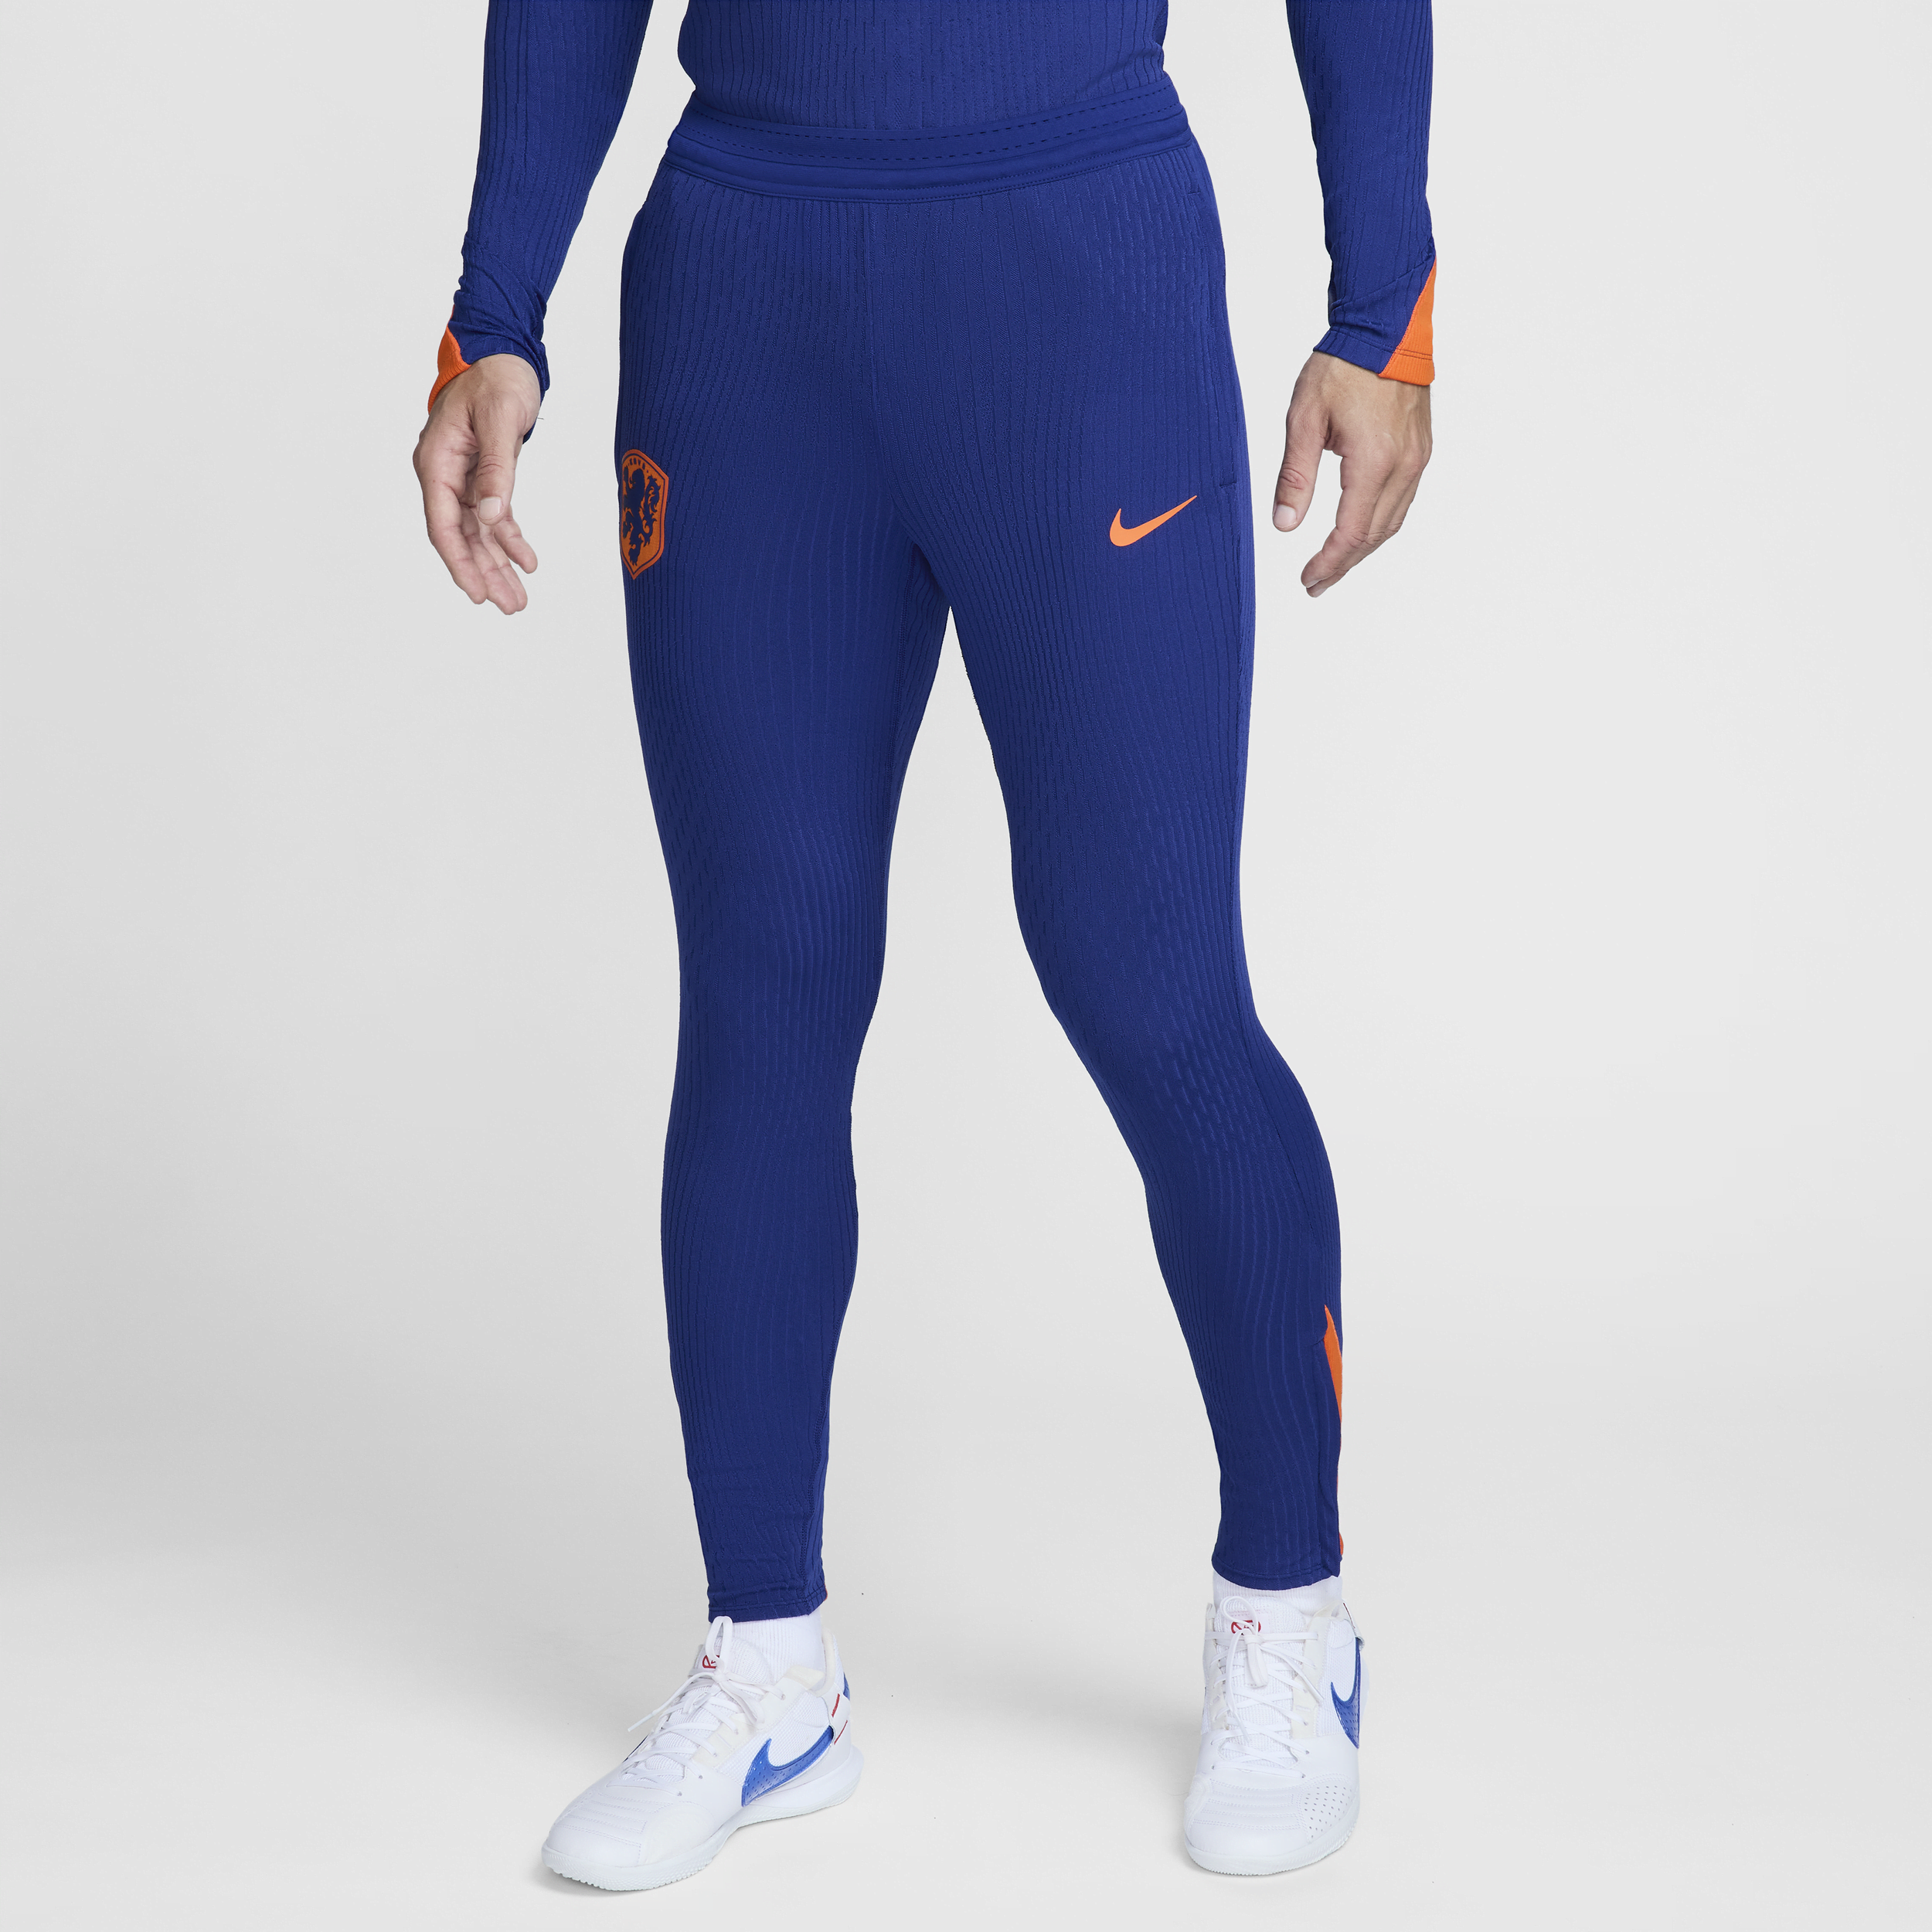 Nike Nederland Strike Elite Dri-FIT ADV knit voetbalbroek voor heren Blauw